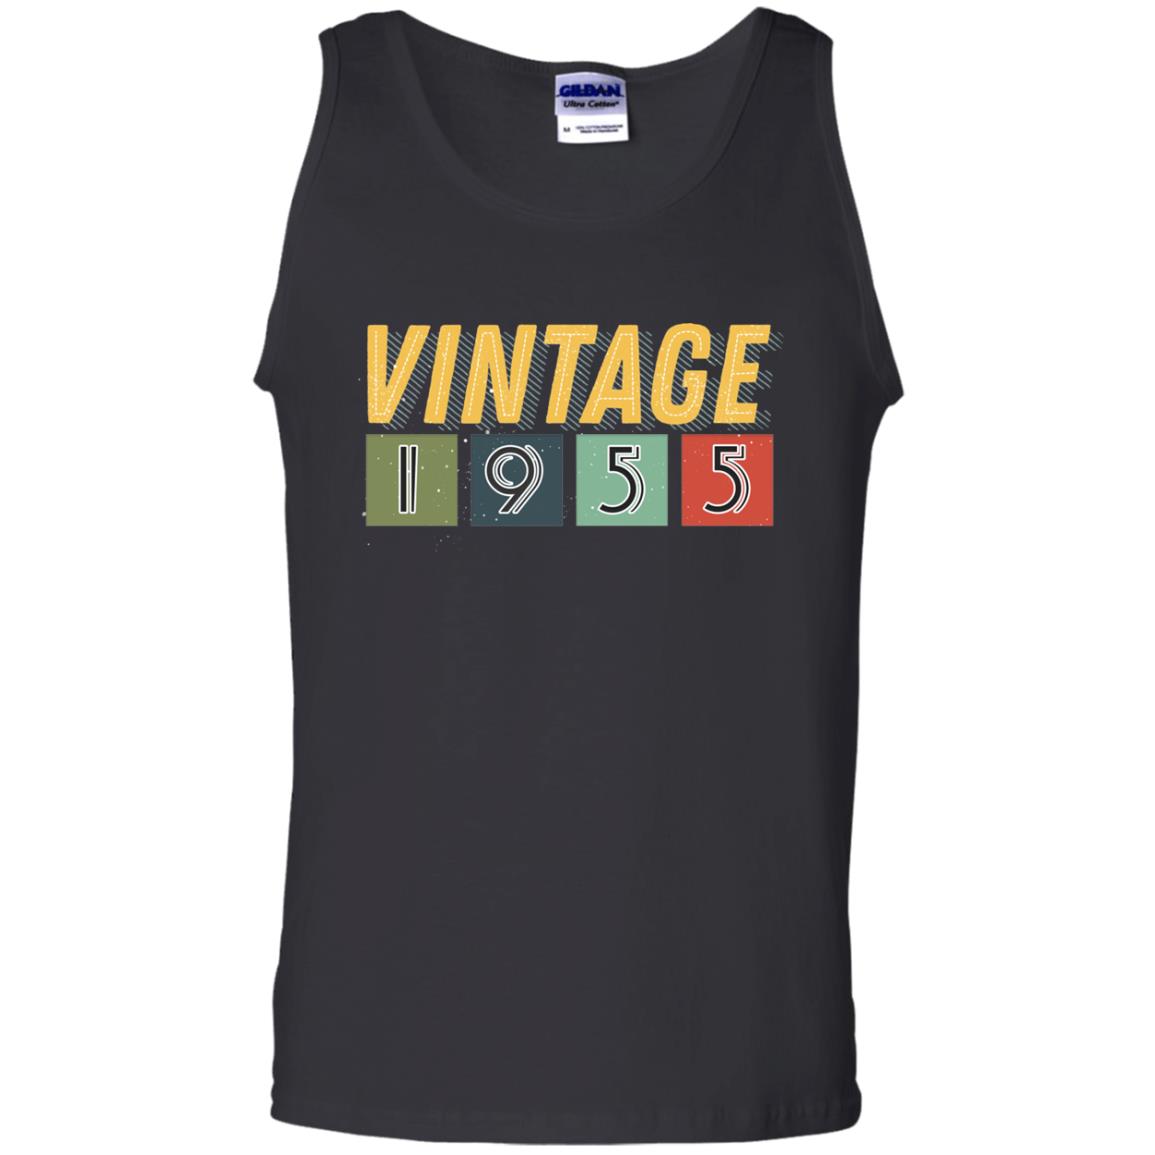 Vintage 1955 63th Birthday Gift Shirt For Mens Or WomensG220 Gildan 100% Cotton Tank Top